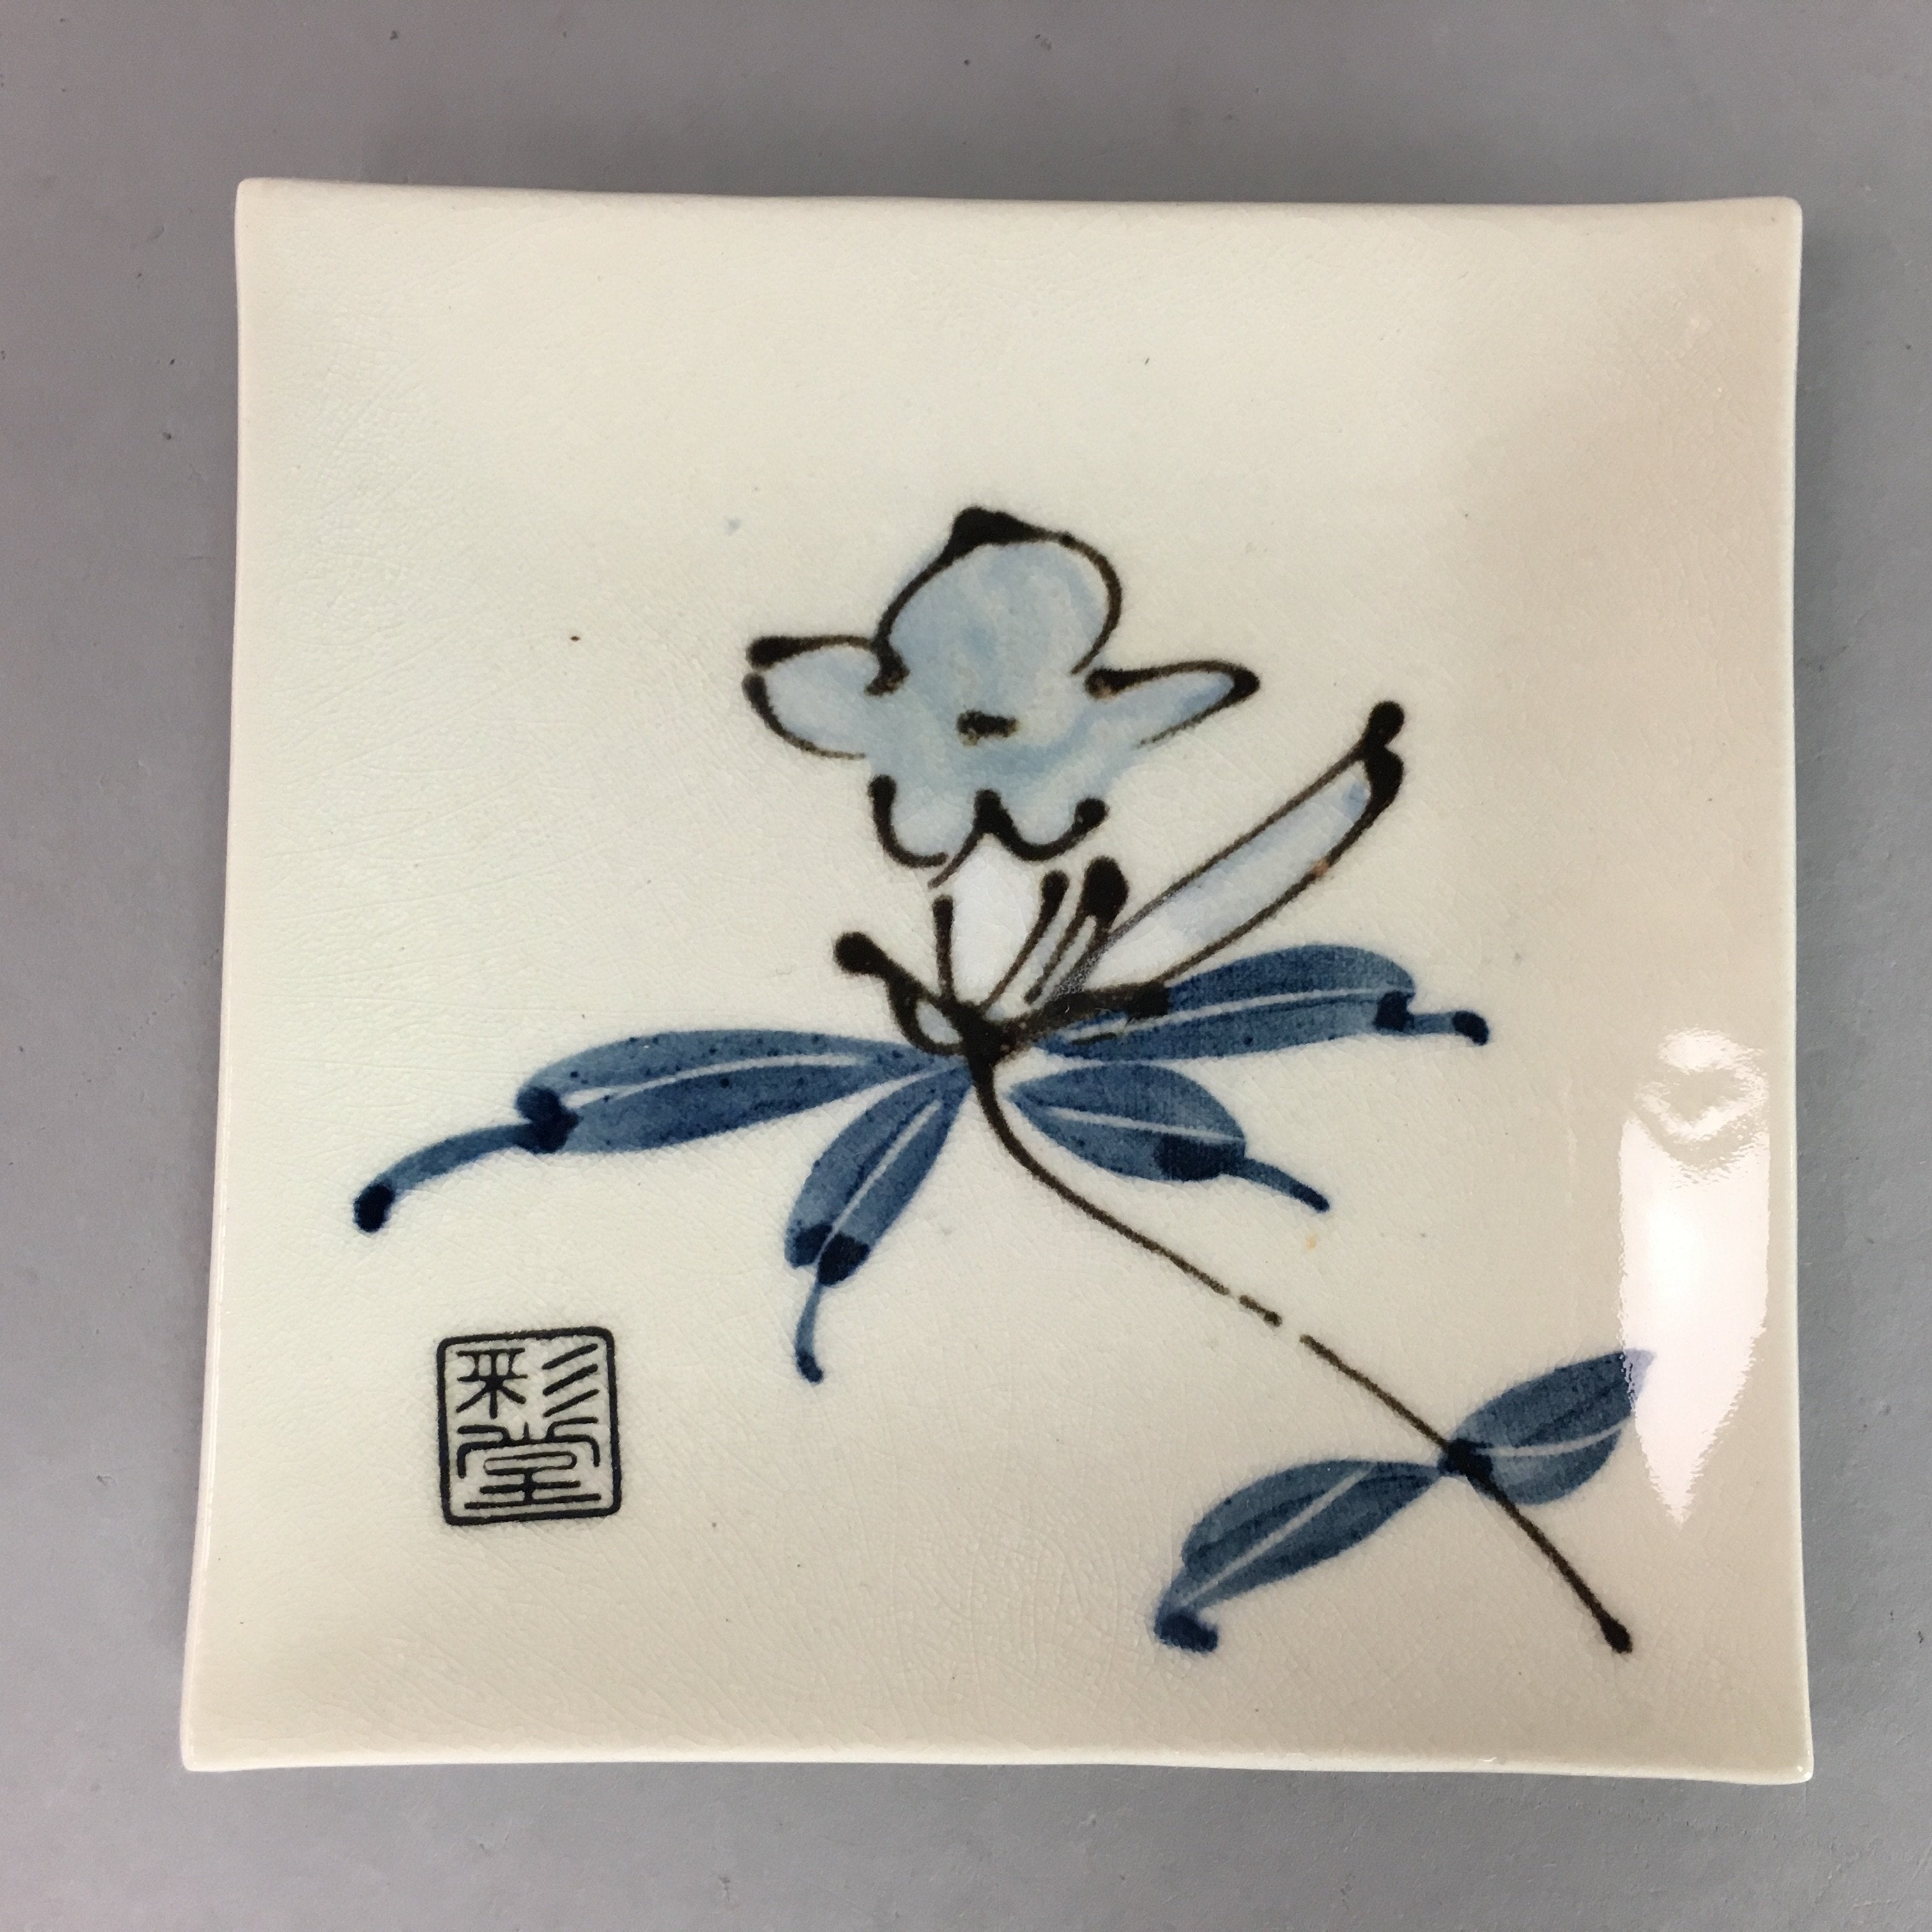 Japanese Ceramic Square Plate Kozara Seto ware Vtg Floral Crackle Pottery PT784